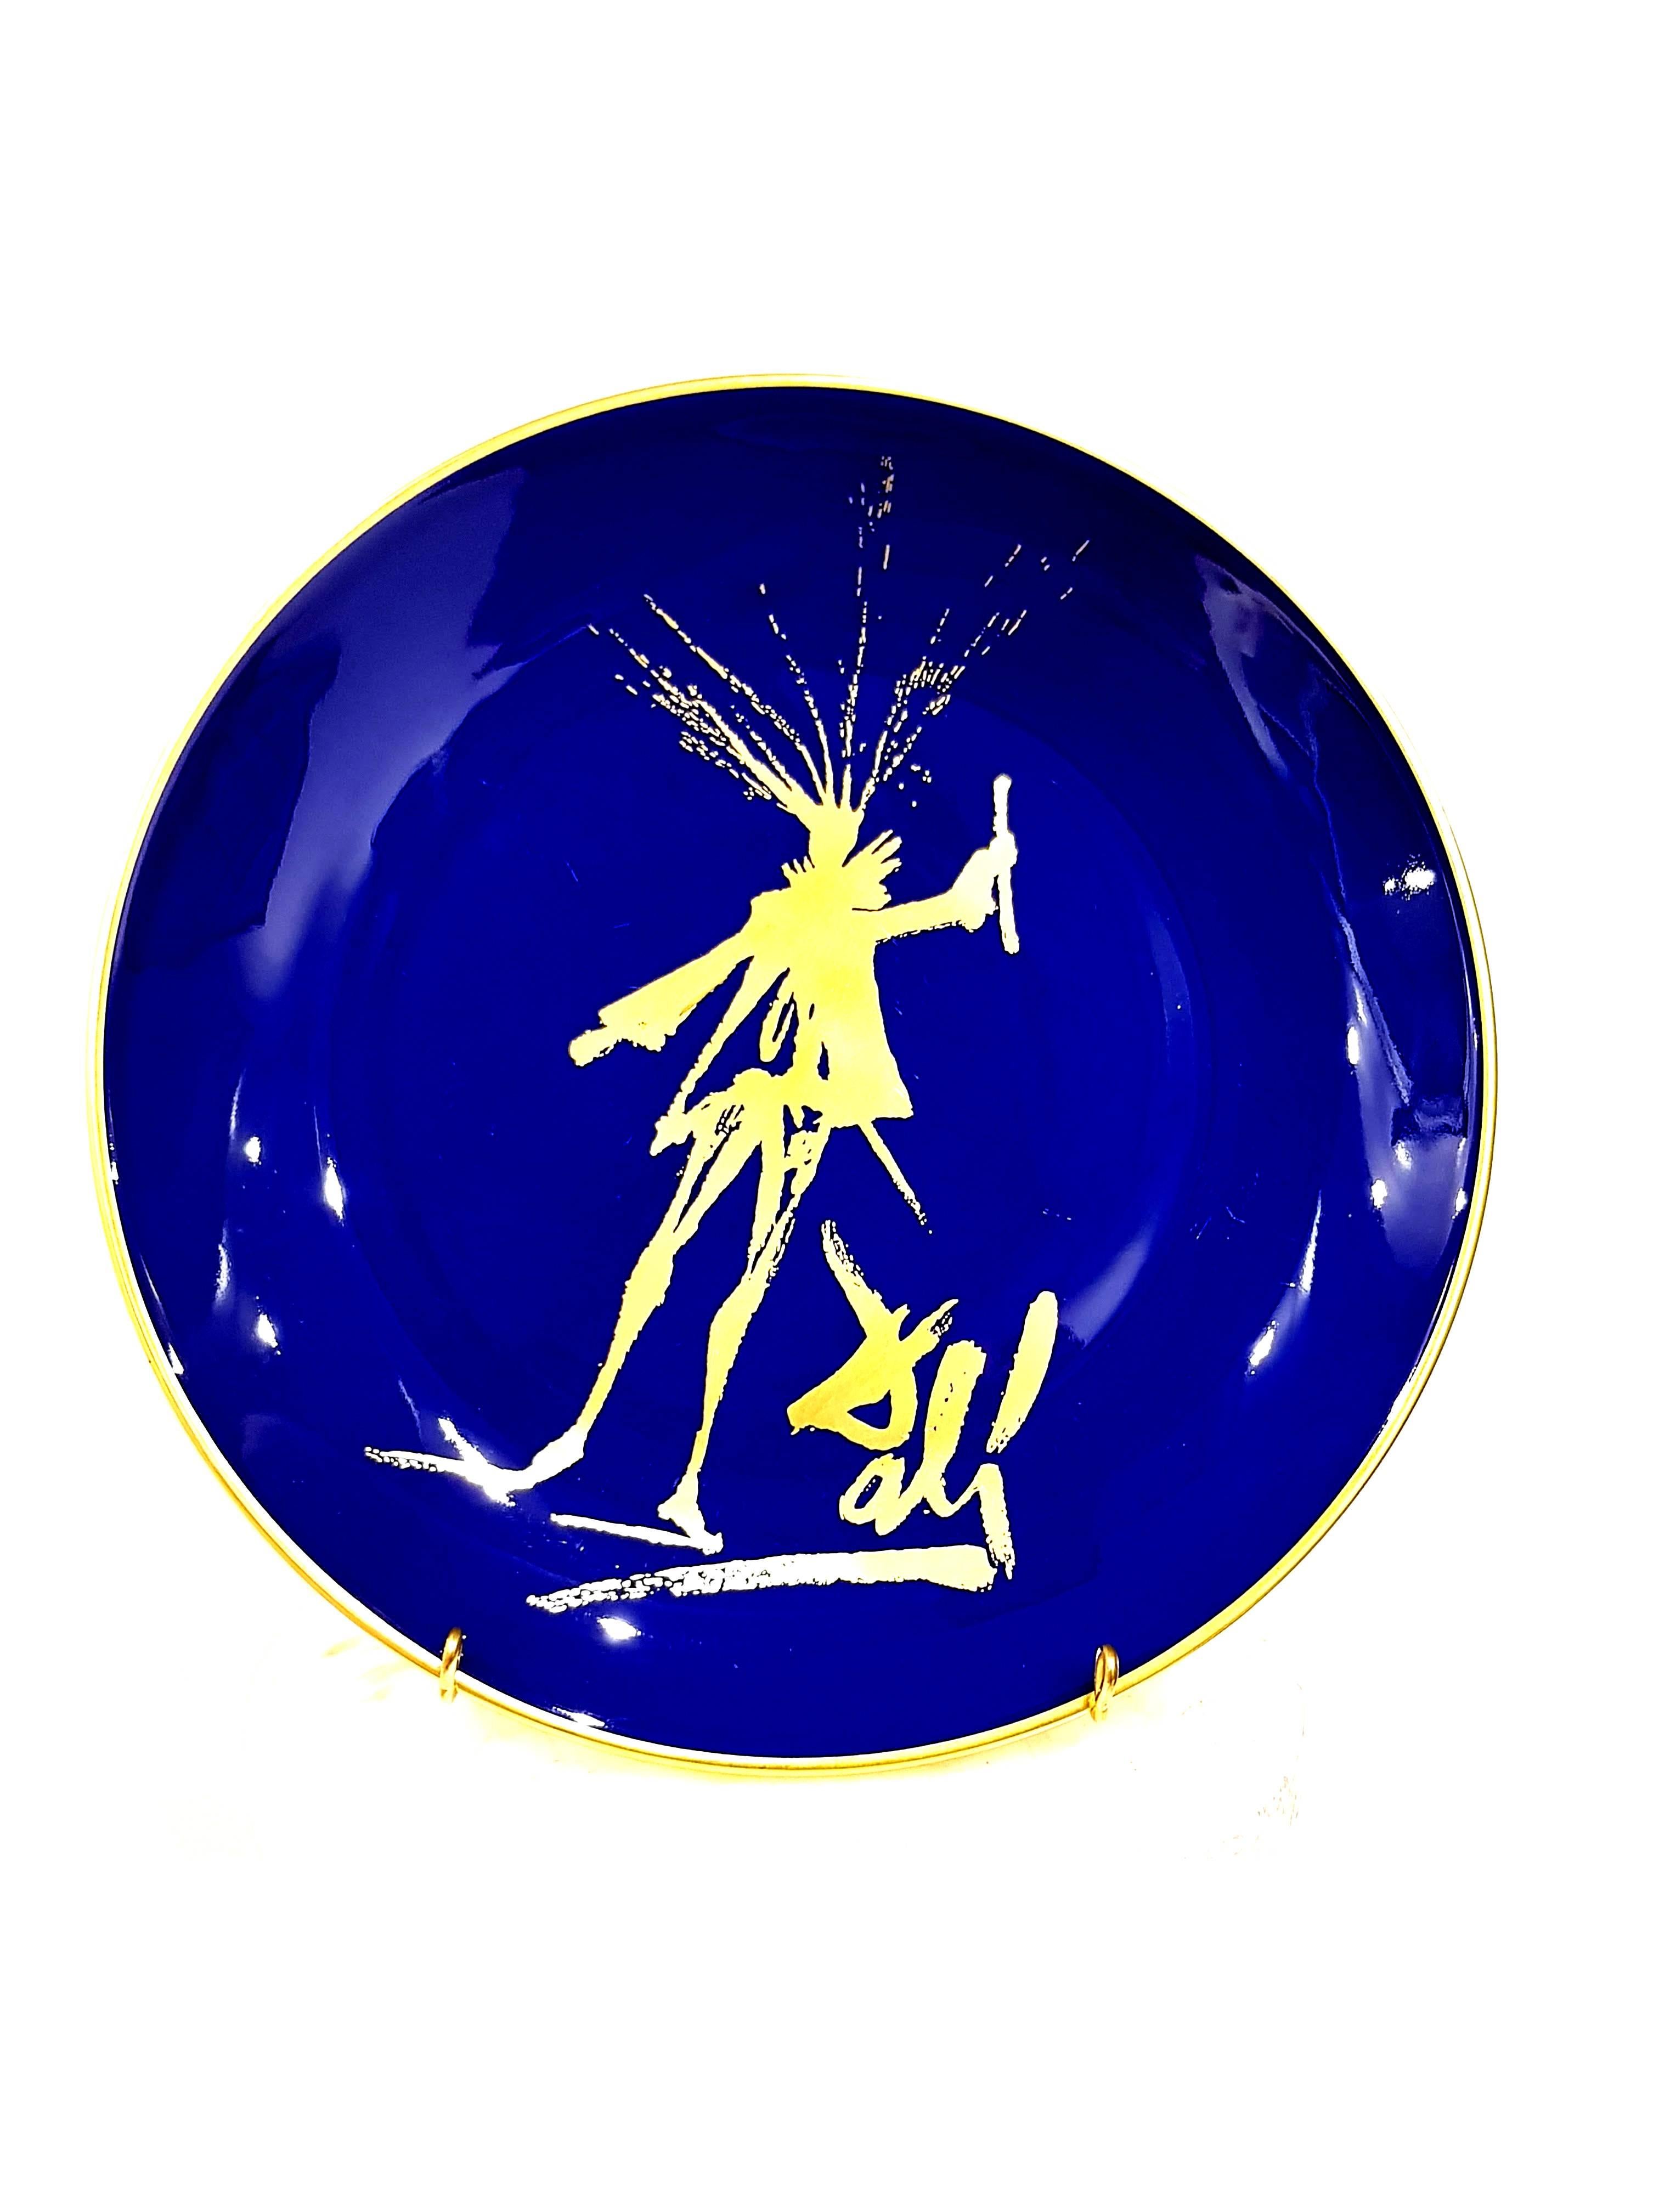 Faust - Porcelaine de Limoges - Bleu et or - Mixed Media Art de (after) Salvador Dali